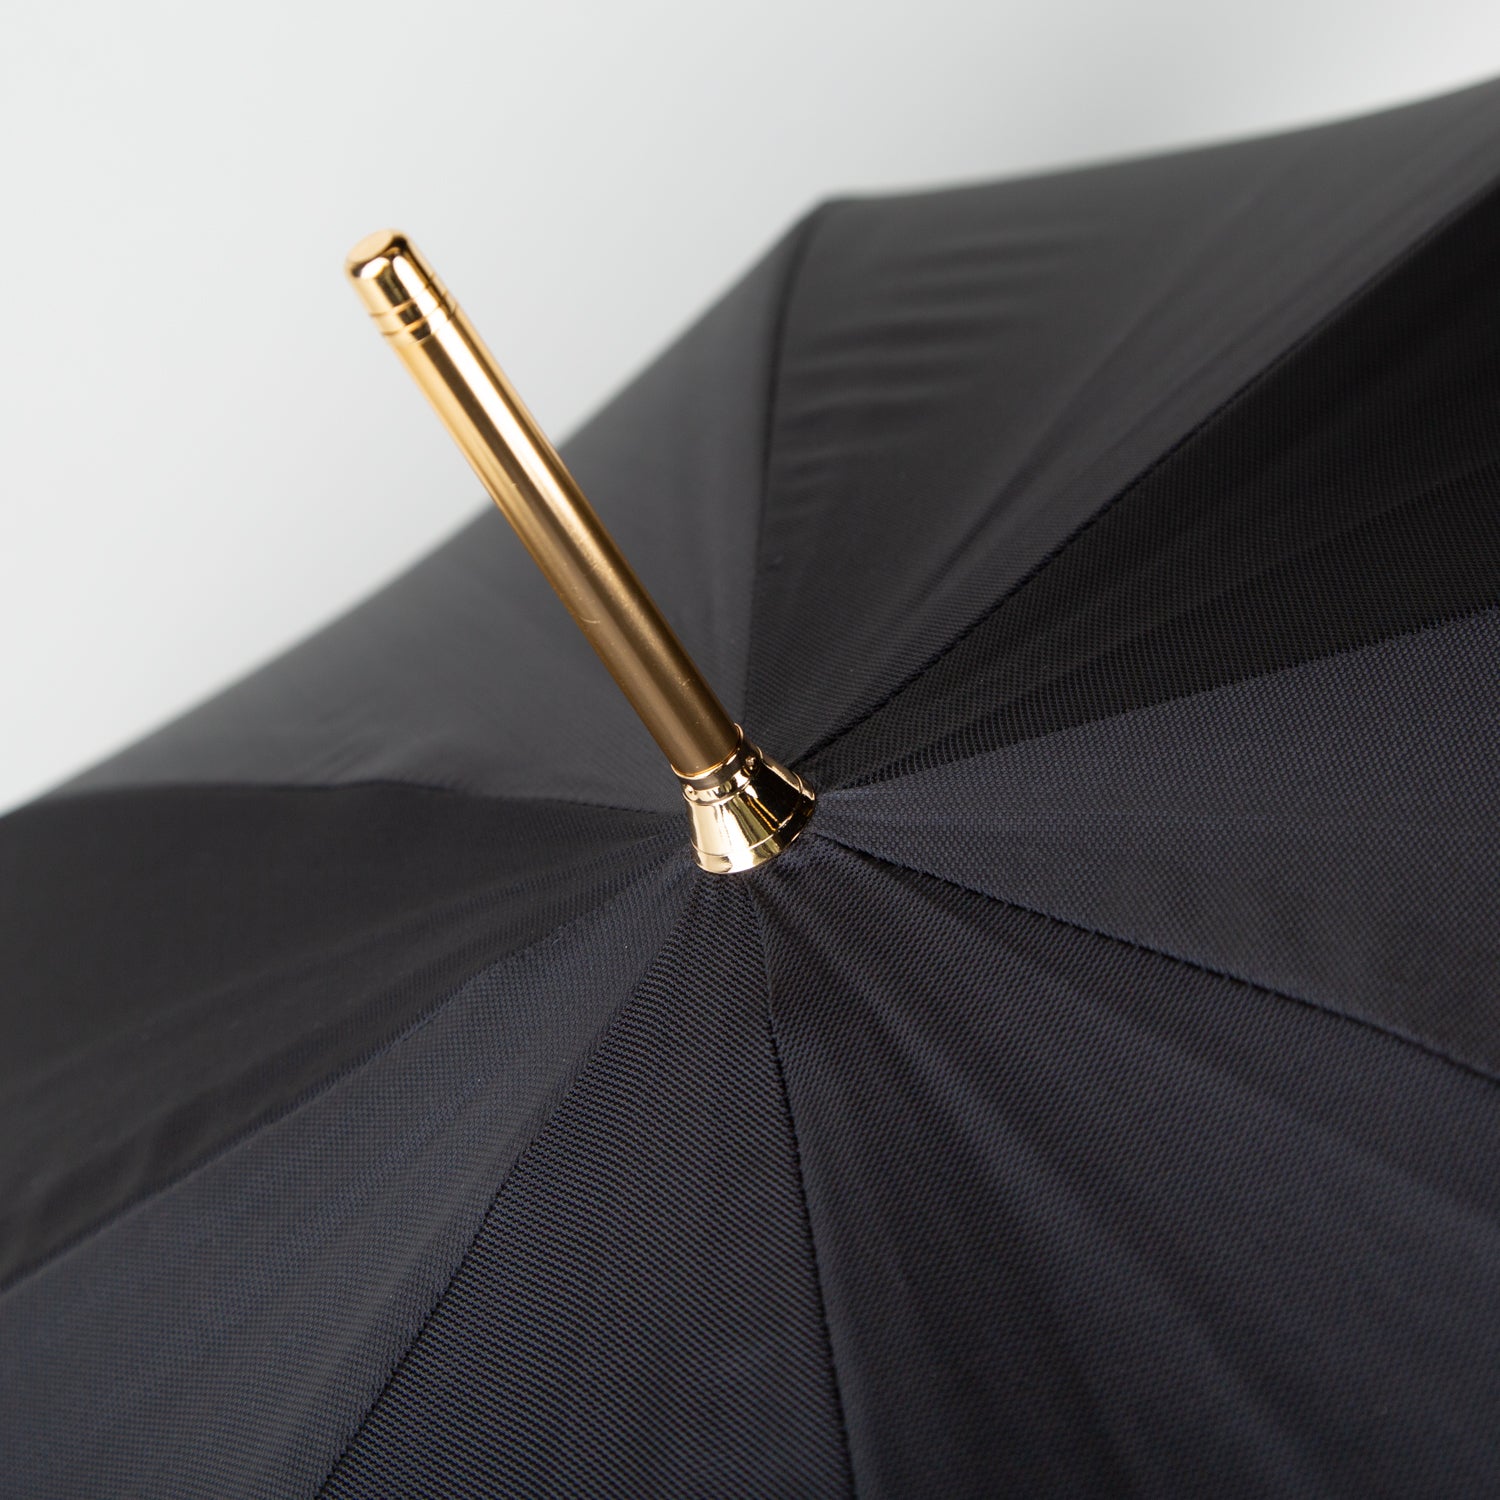 golden horse umbrella with a black canopy